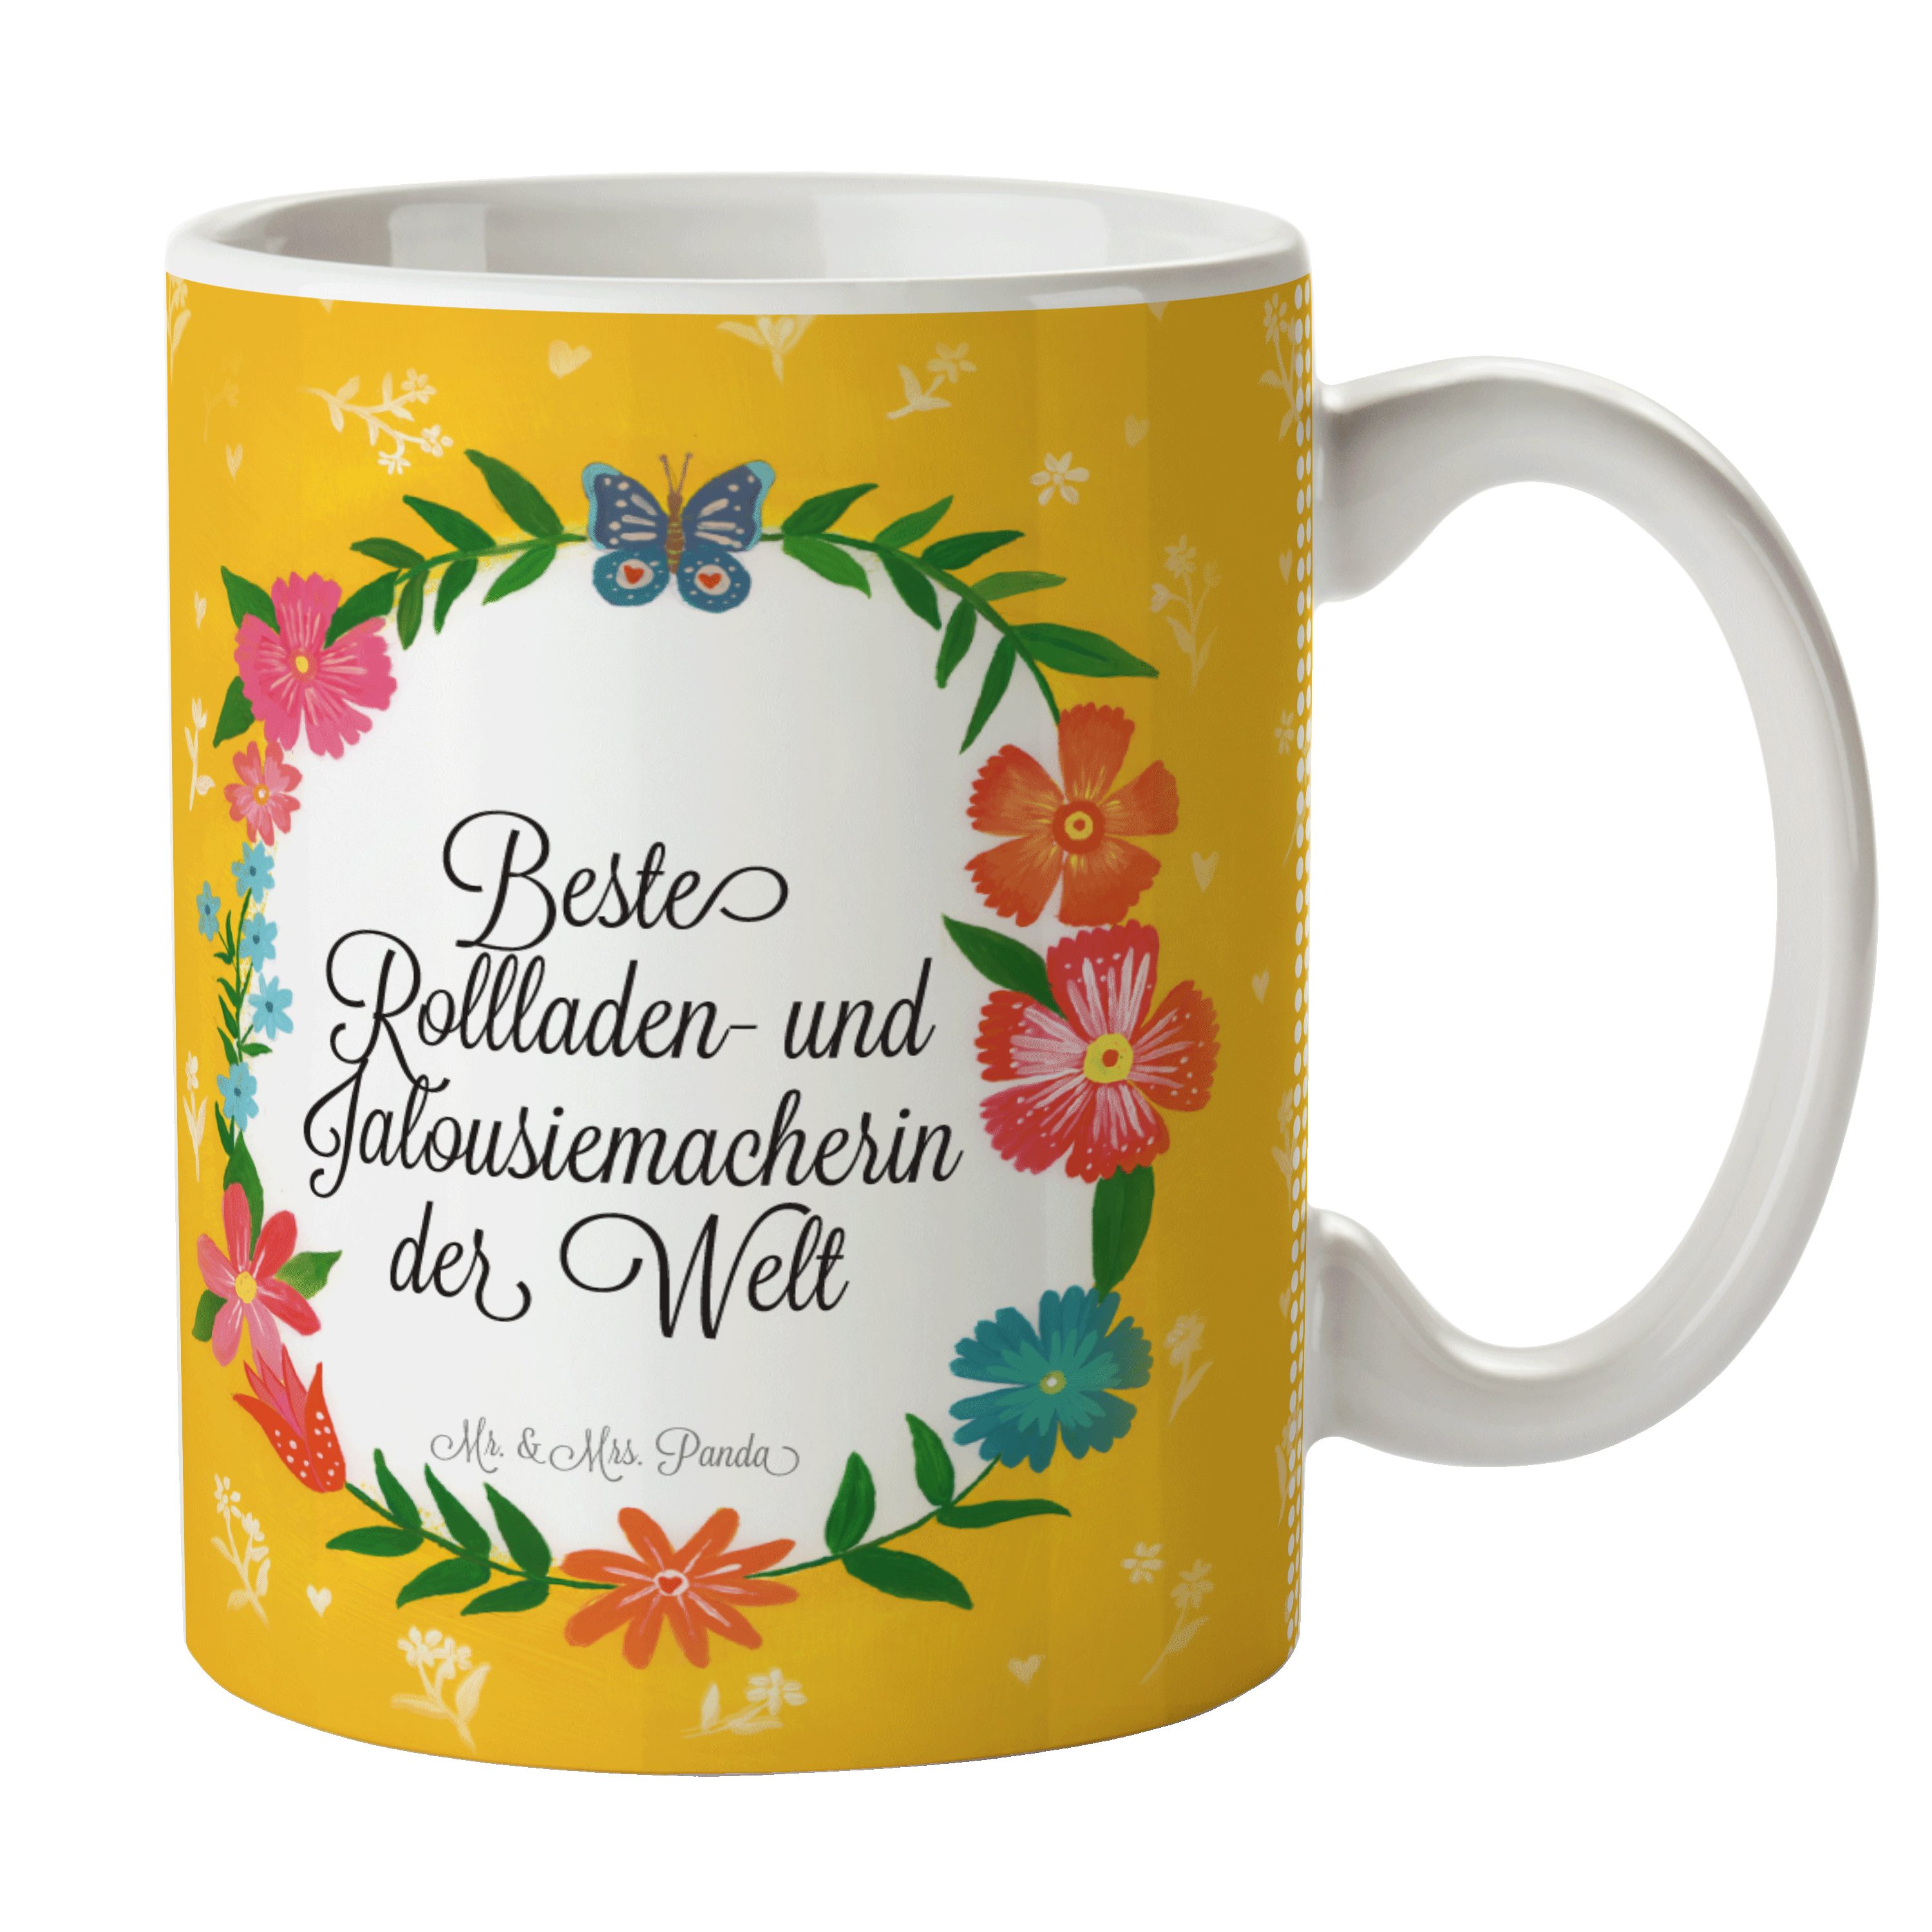 Mr. & Mrs. Panda Tasse Rollladen- und Jalousiemacherin - Geschenk, Bachelor, Kaffeetasse, Te, Keramik